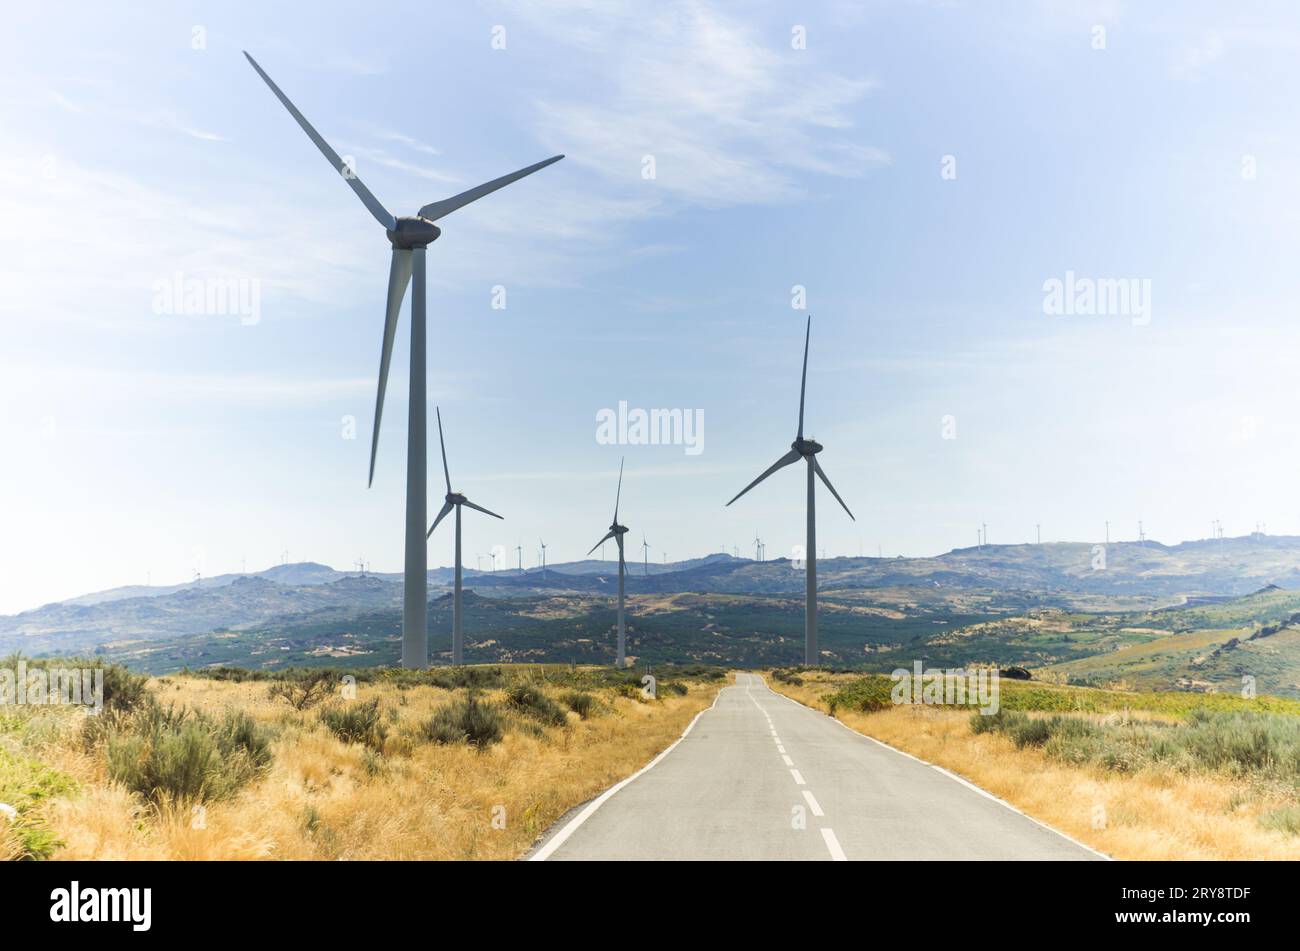 https://c8.alamy.com/comp/2RY8TDF/wind-turbines-2RY8TDF.jpg